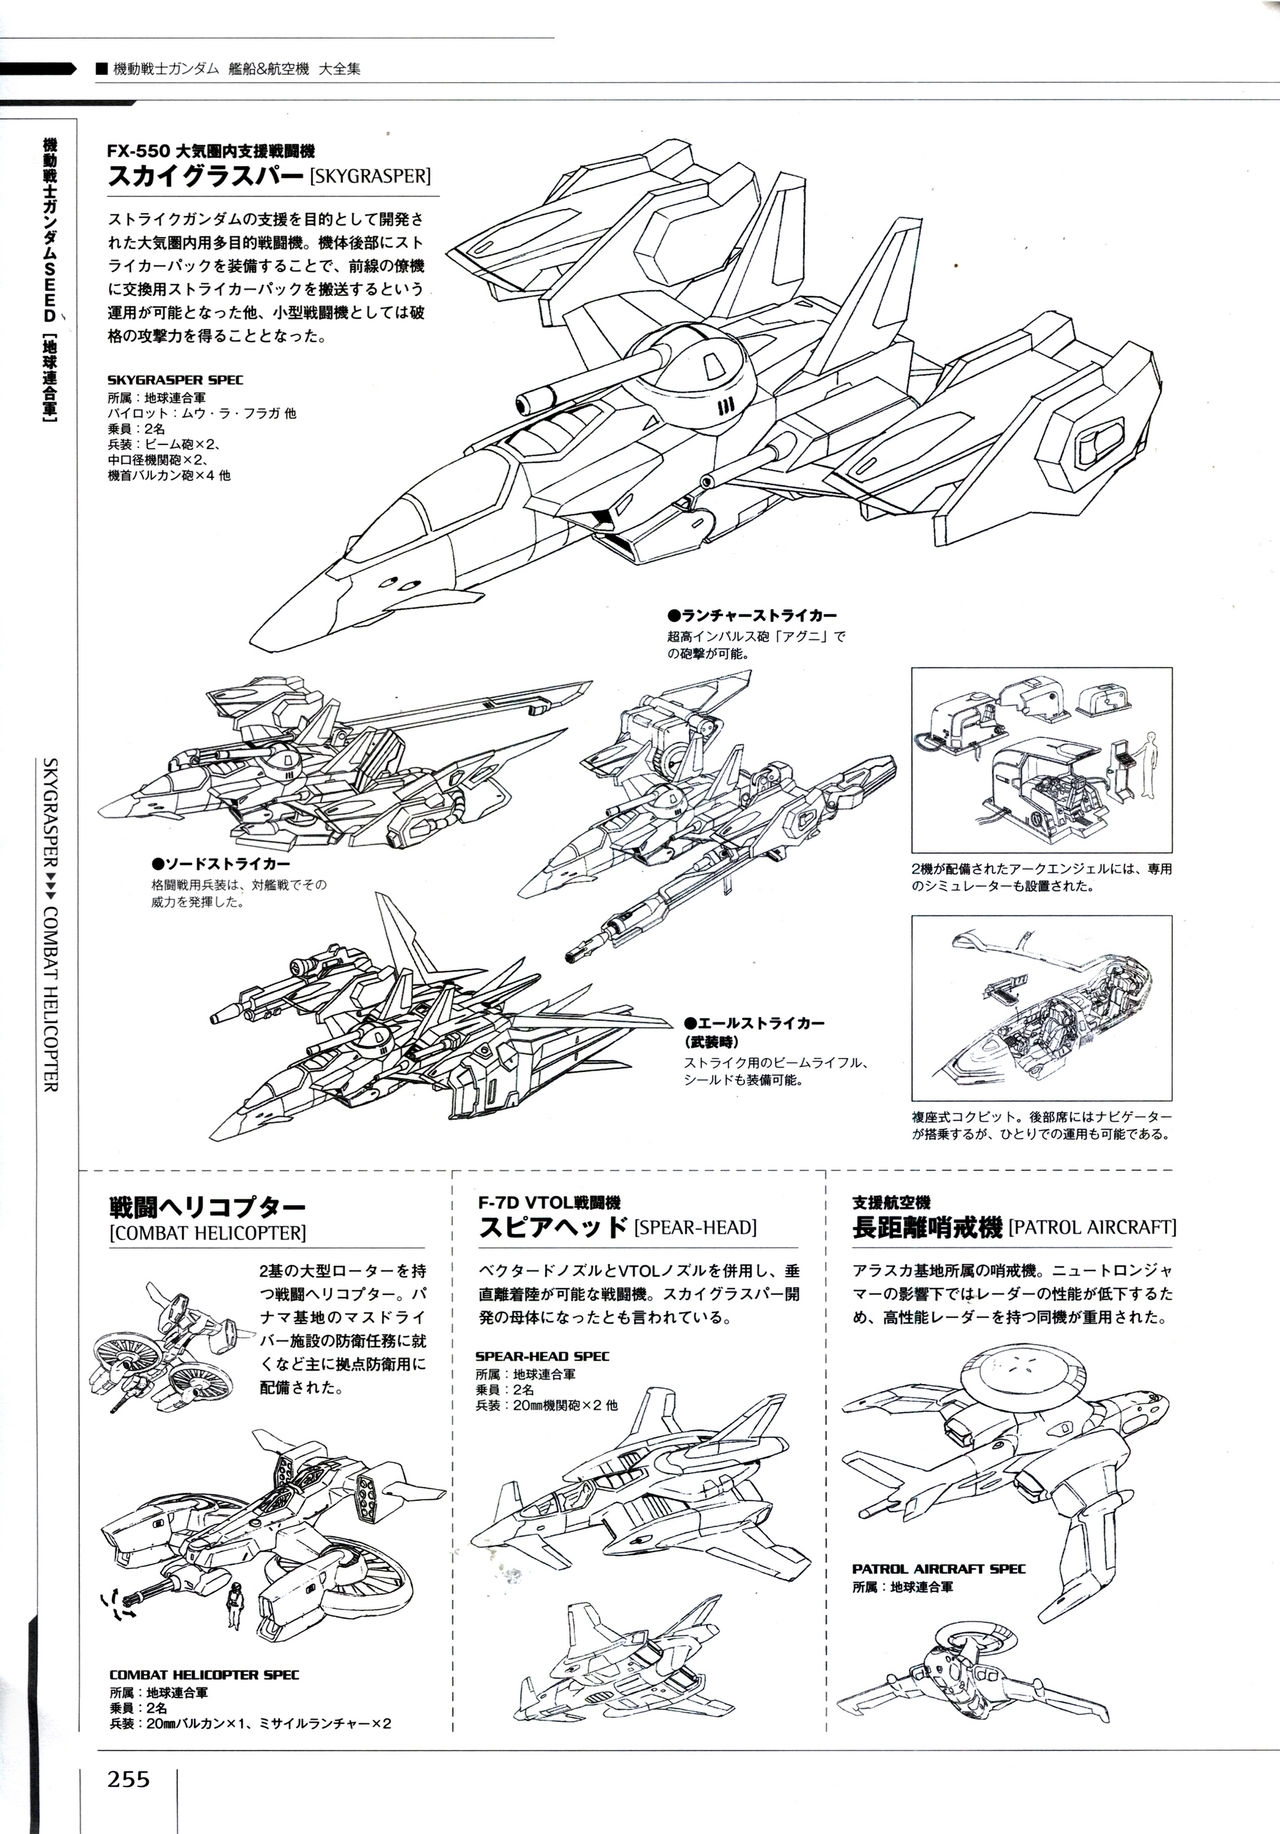 Mobile Suit Gundam - Ship & Aerospace Plane Encyclopedia - Revised Edition 260